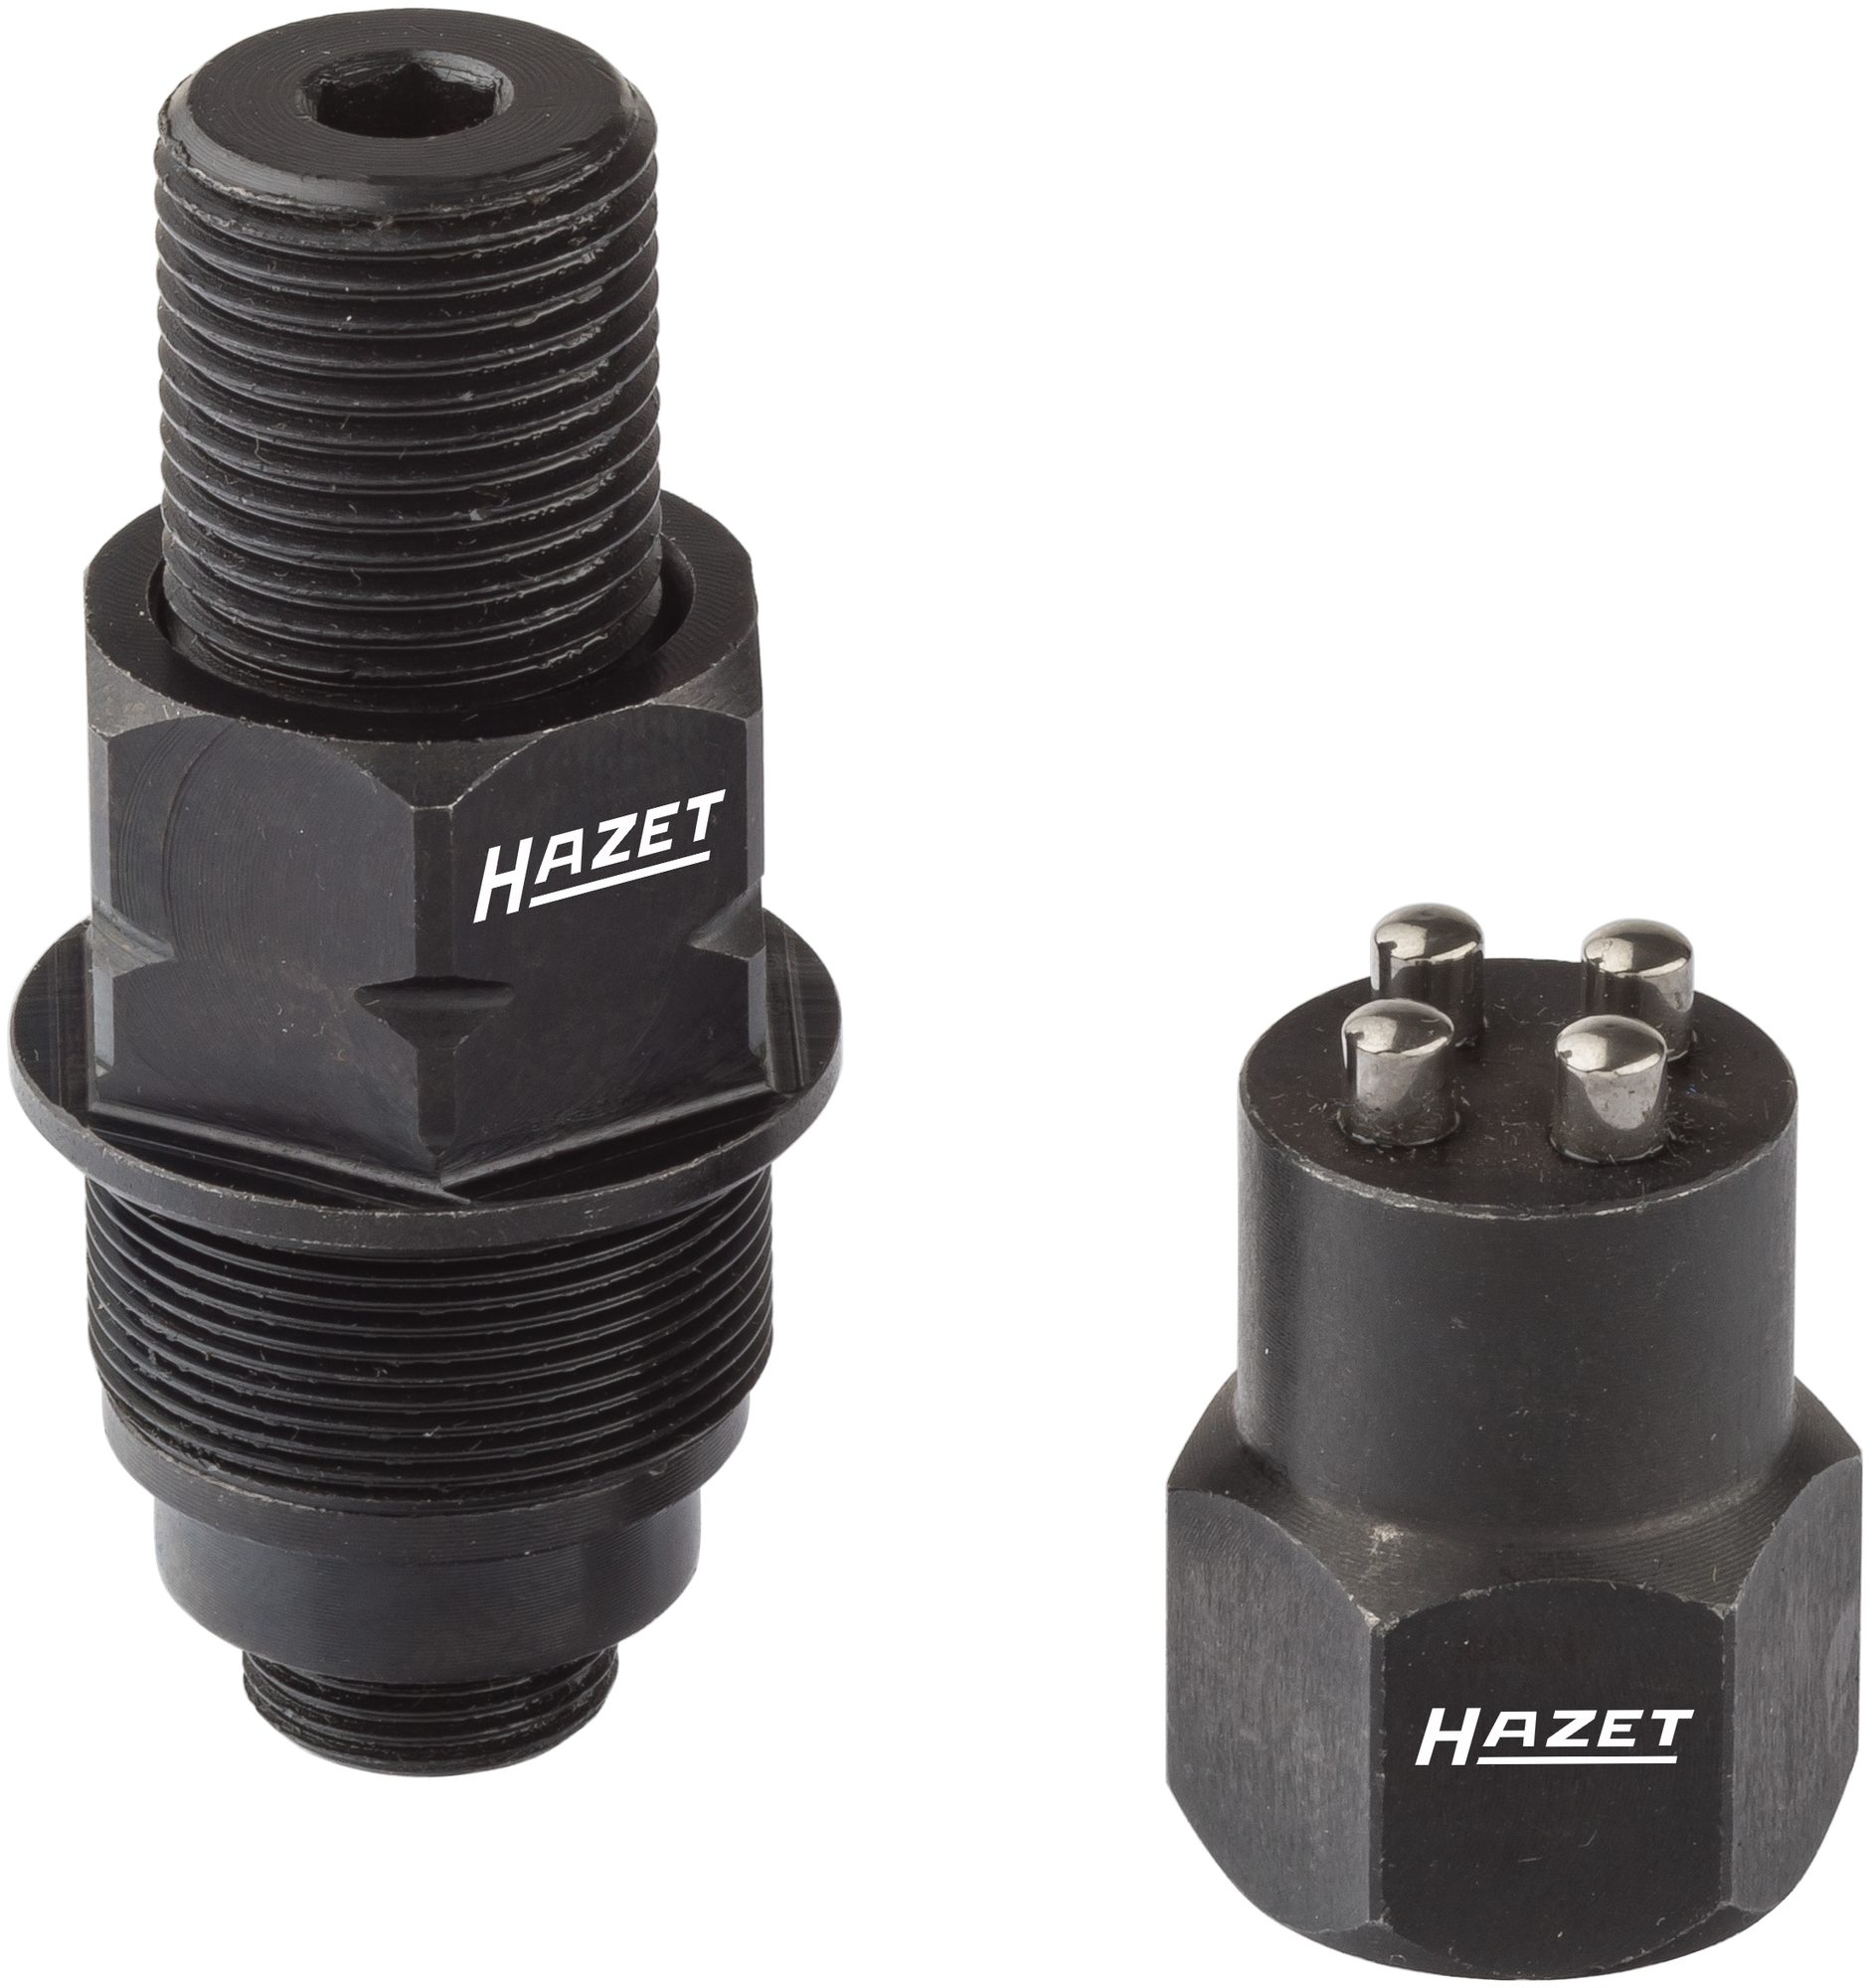 HAZET Injektor-Adapter Satz Siemens 4798-21/2